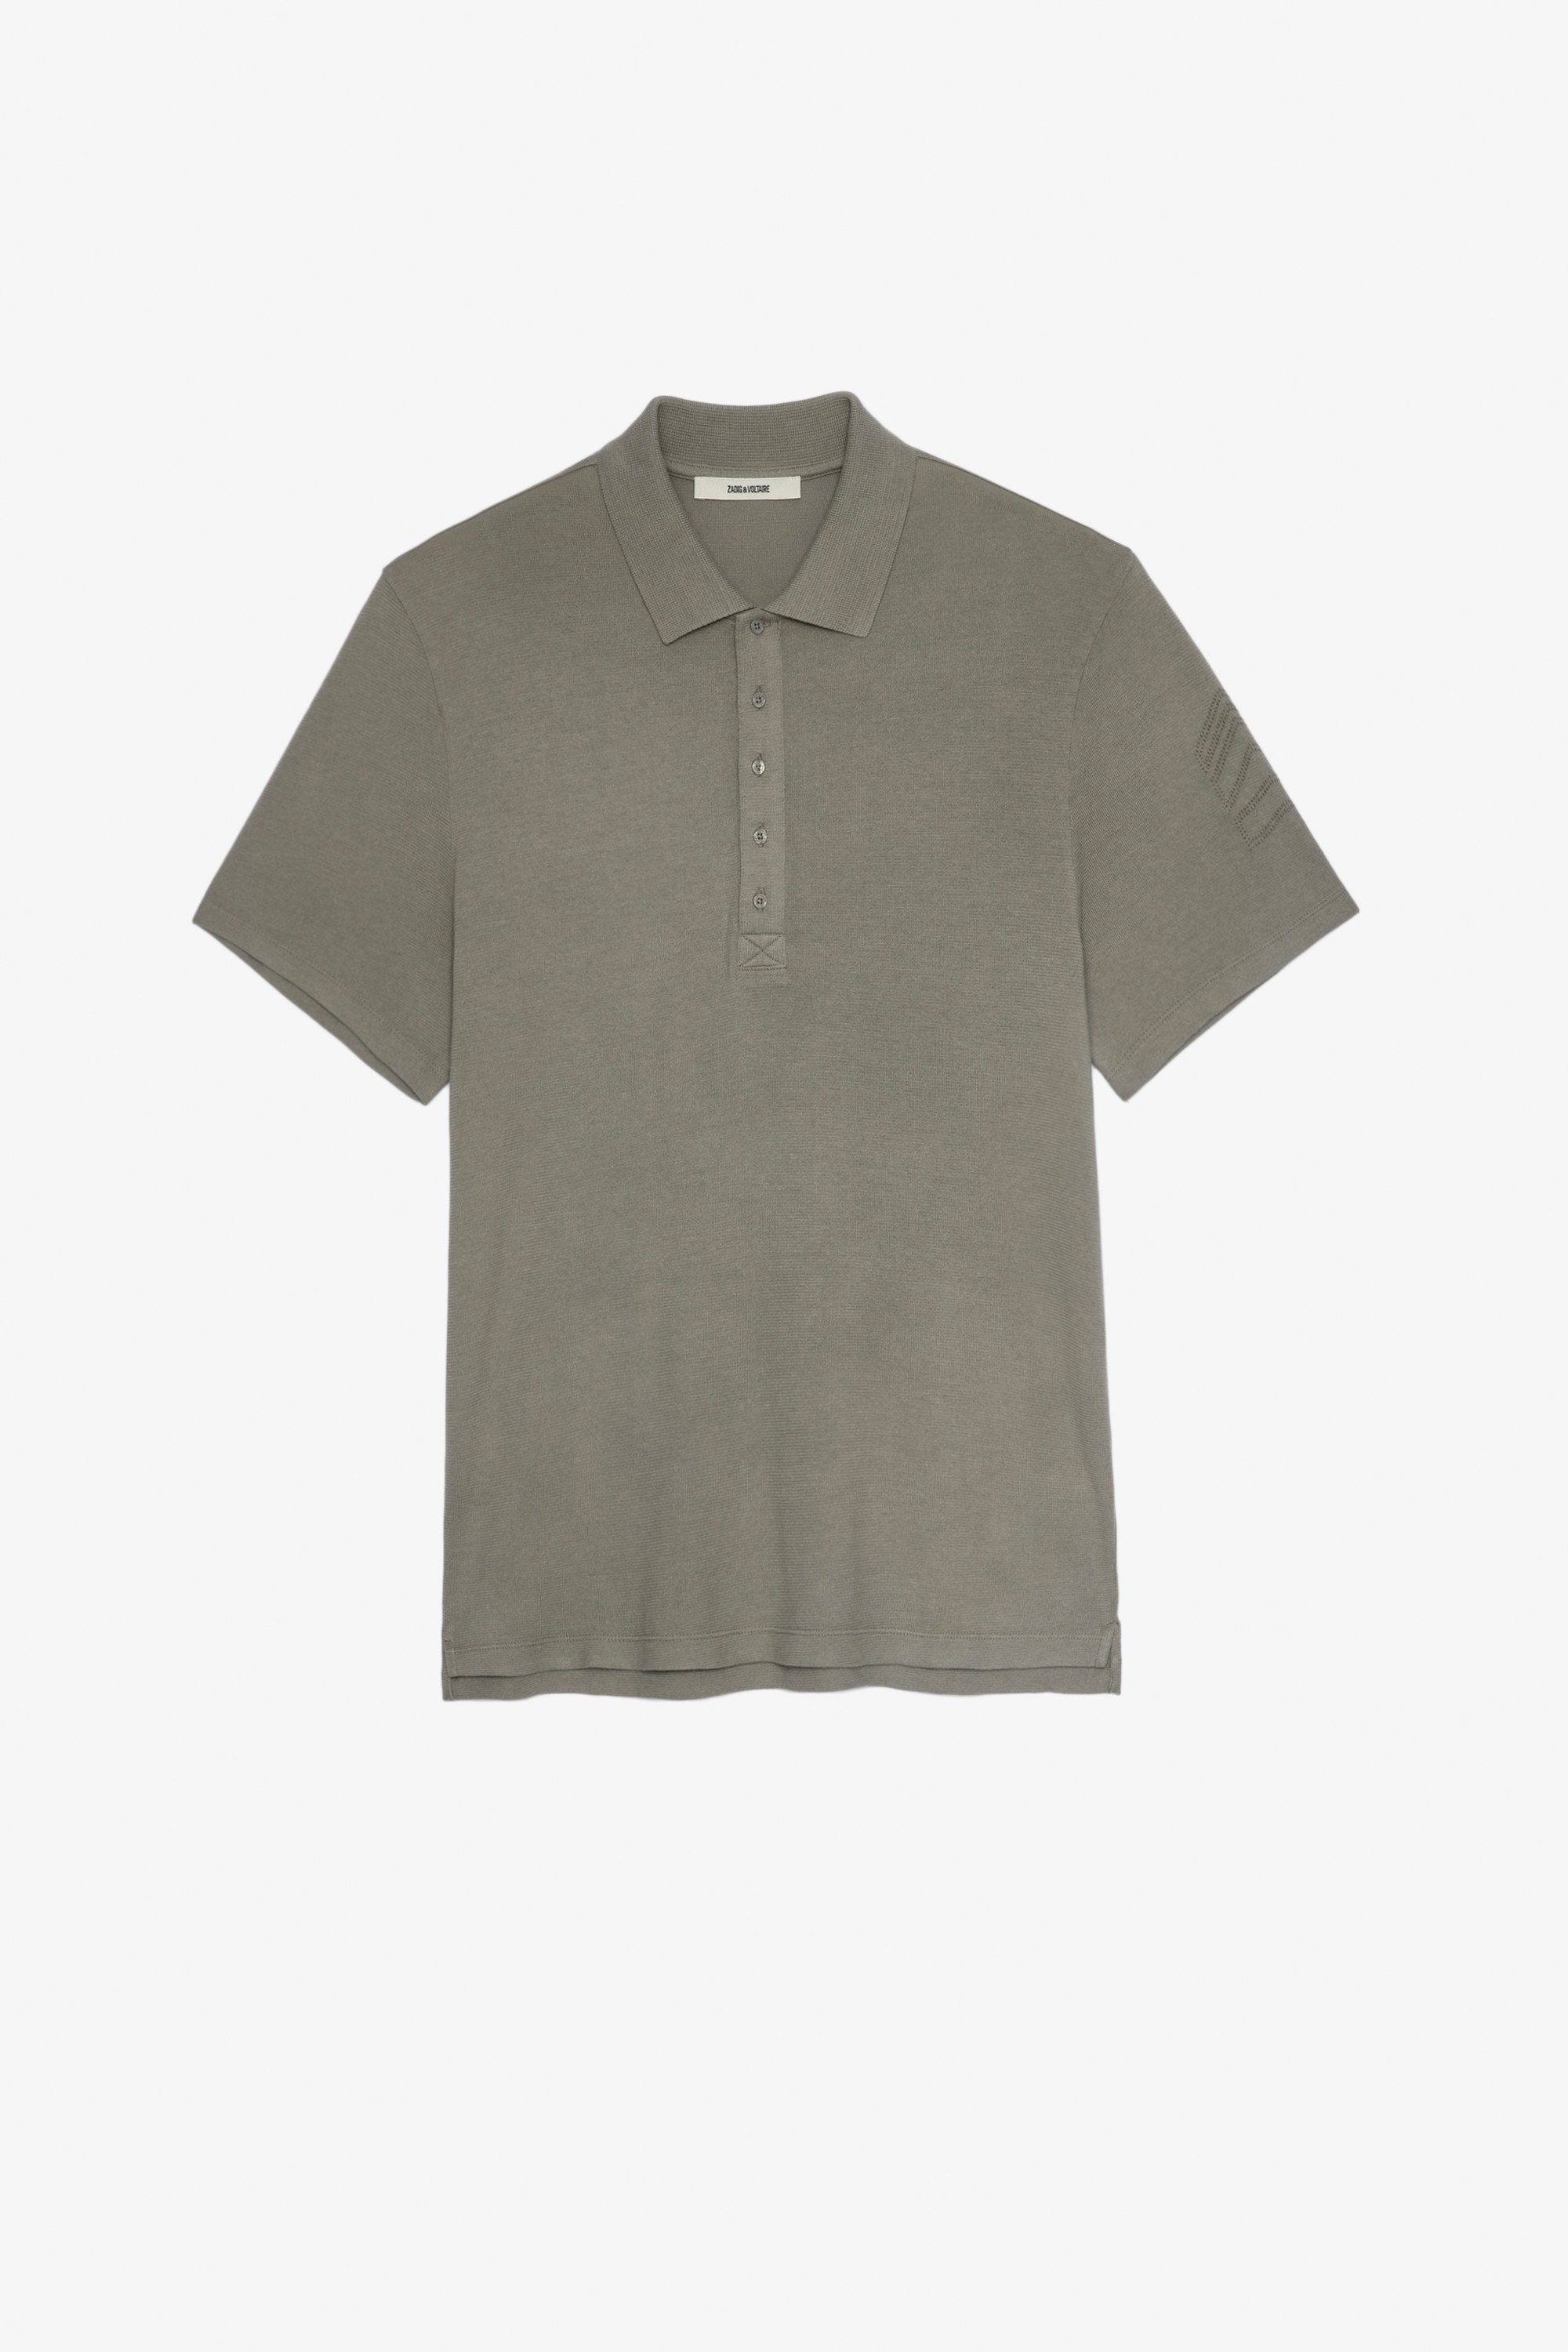 Dimitri Ｔシャツ グリーンコットン ボタンダウンシャツカラー ポロシャツ メンズ